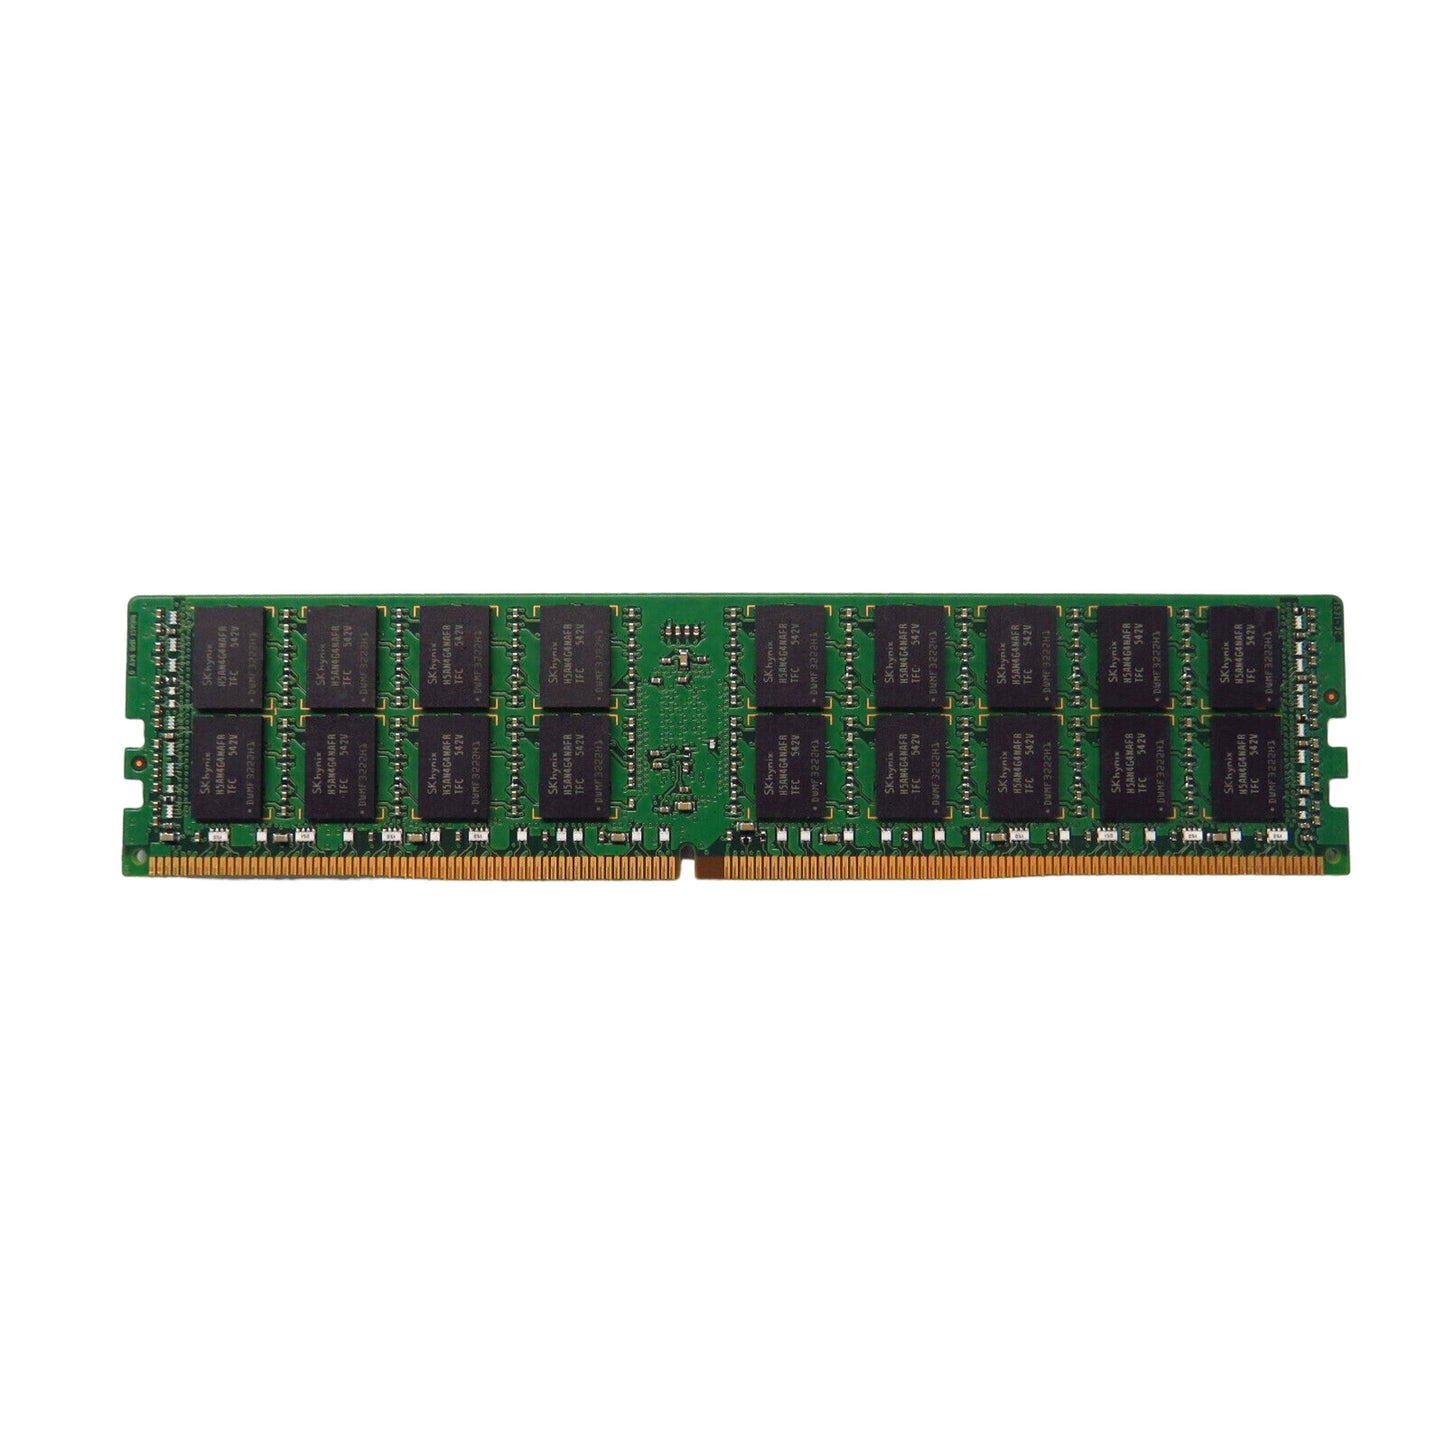 Lenovo 46W0798 47J0253 16GB 2Rx4 PC4-17000 2133MHz LP DDR4 RDIMM Server Memory (Refurbished)